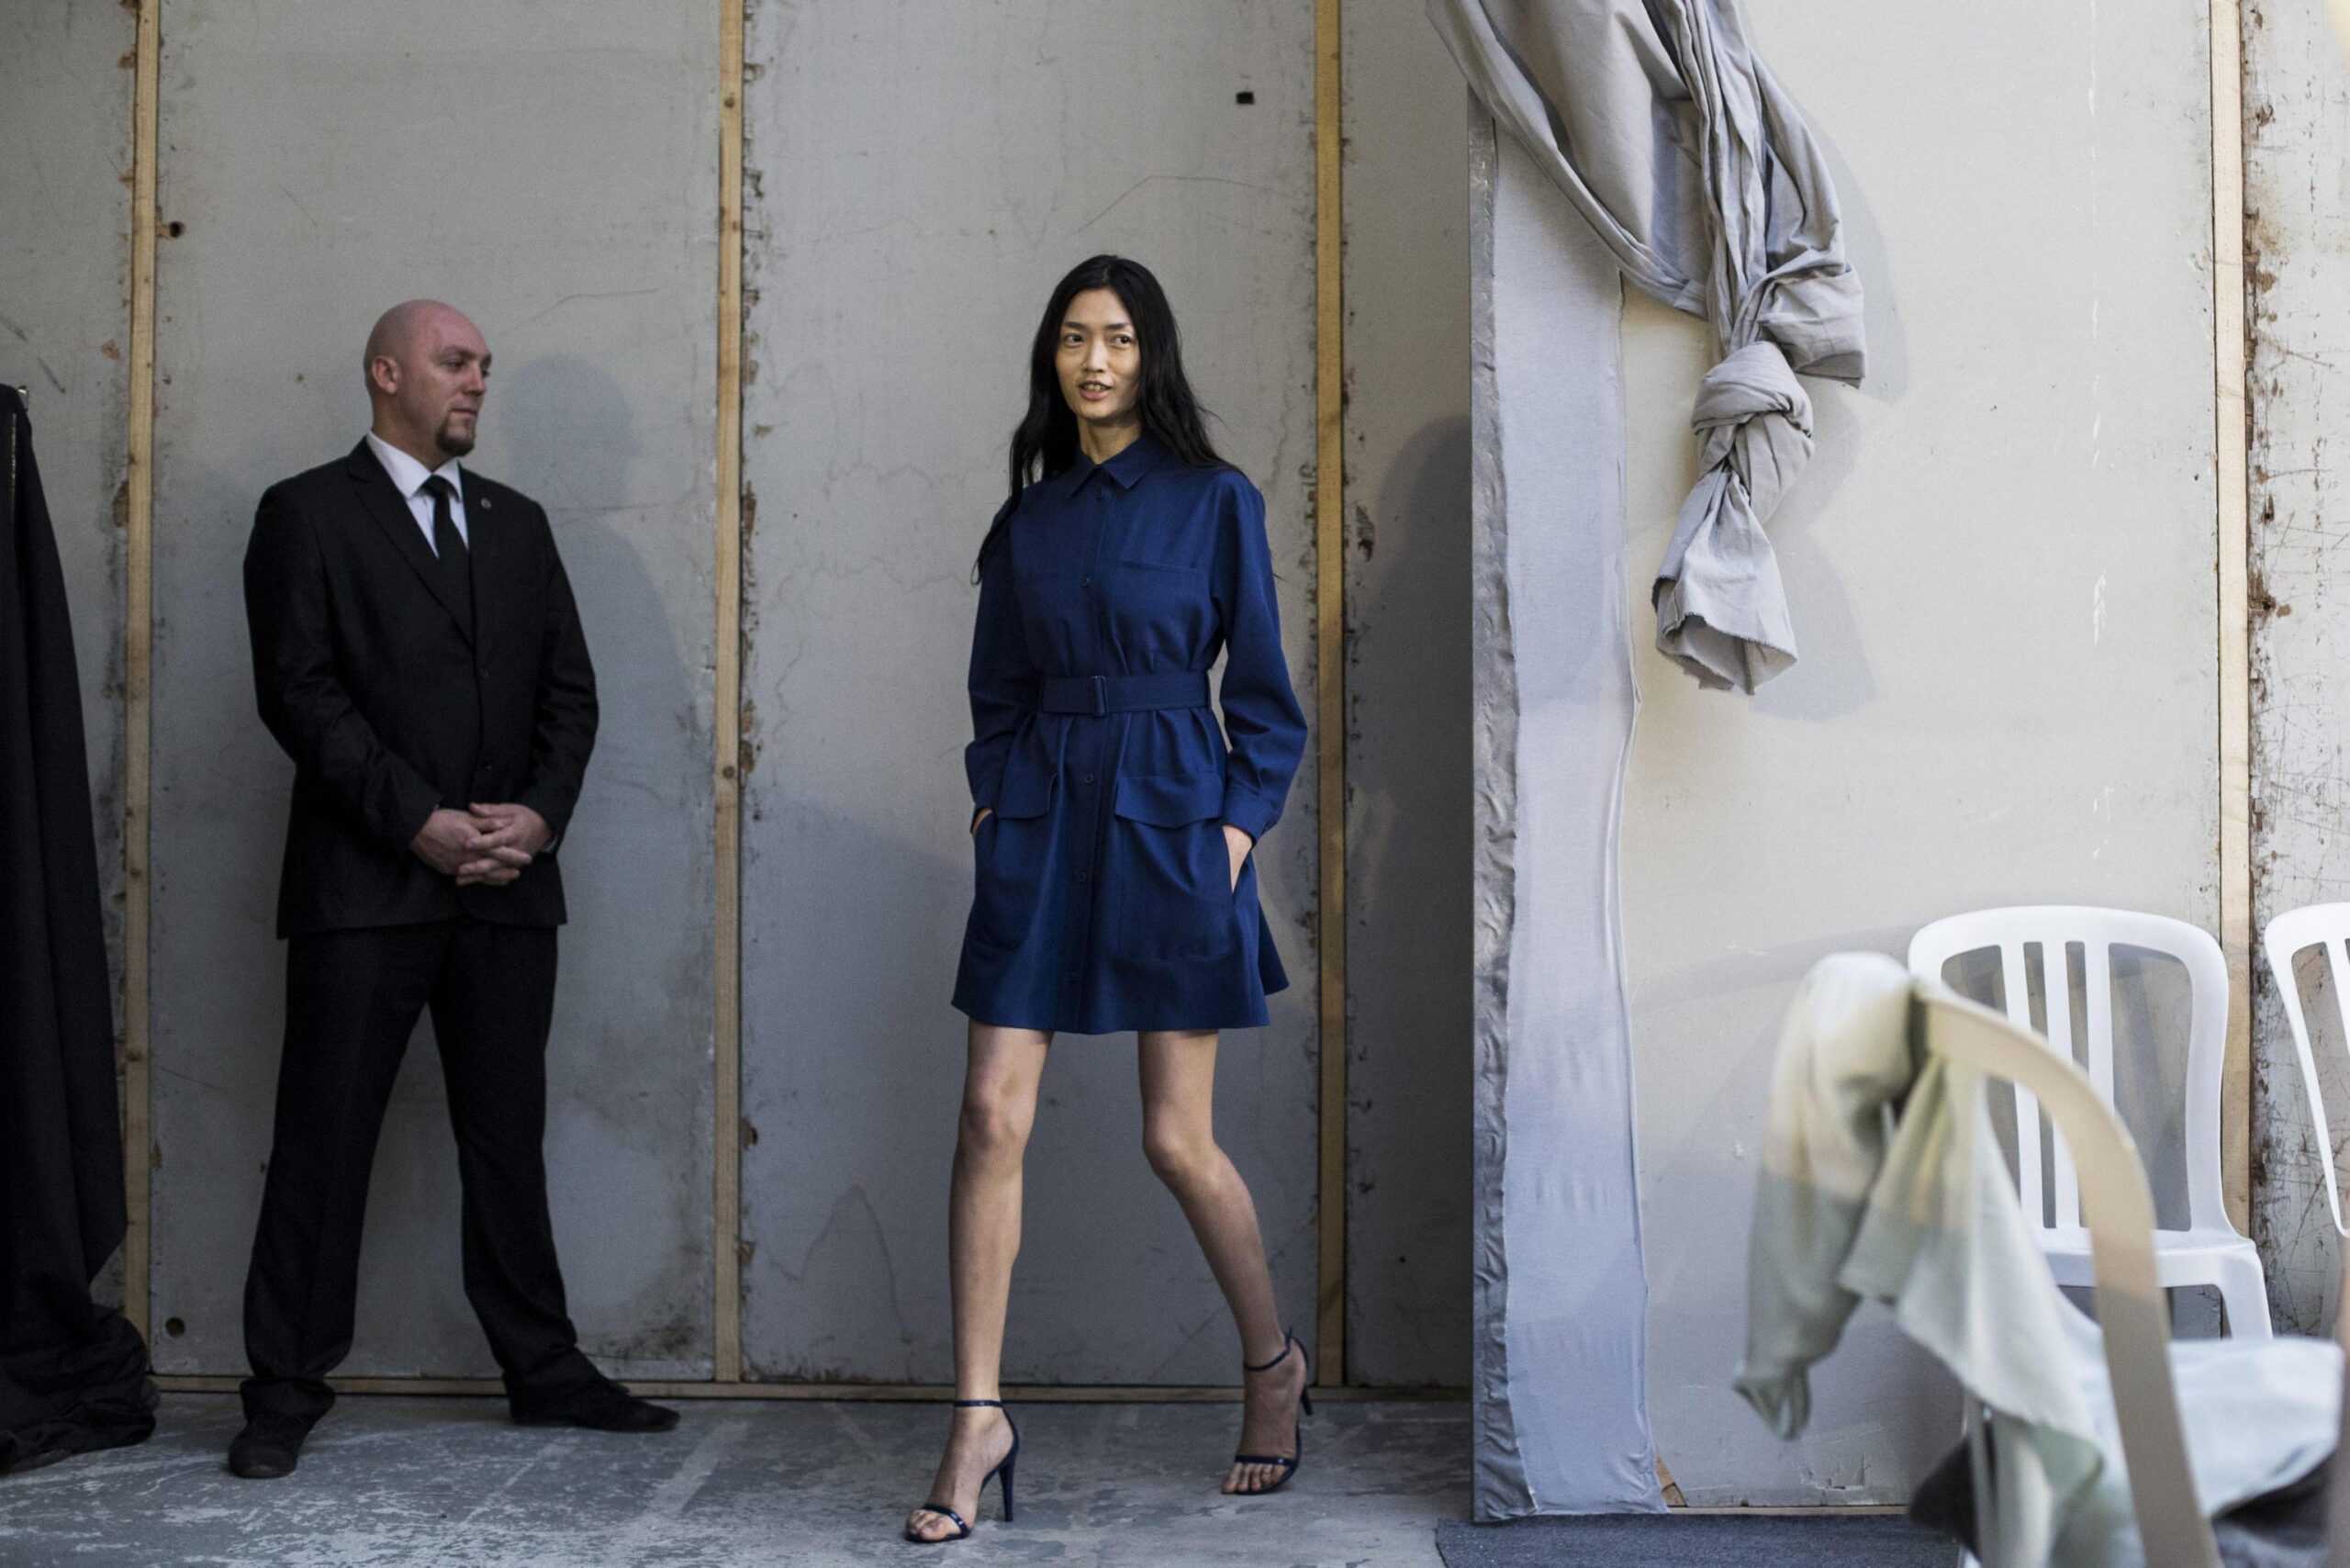 Fotoracconto sulla vita di Qiwen Feng, la modella della Paris Fashion Week02